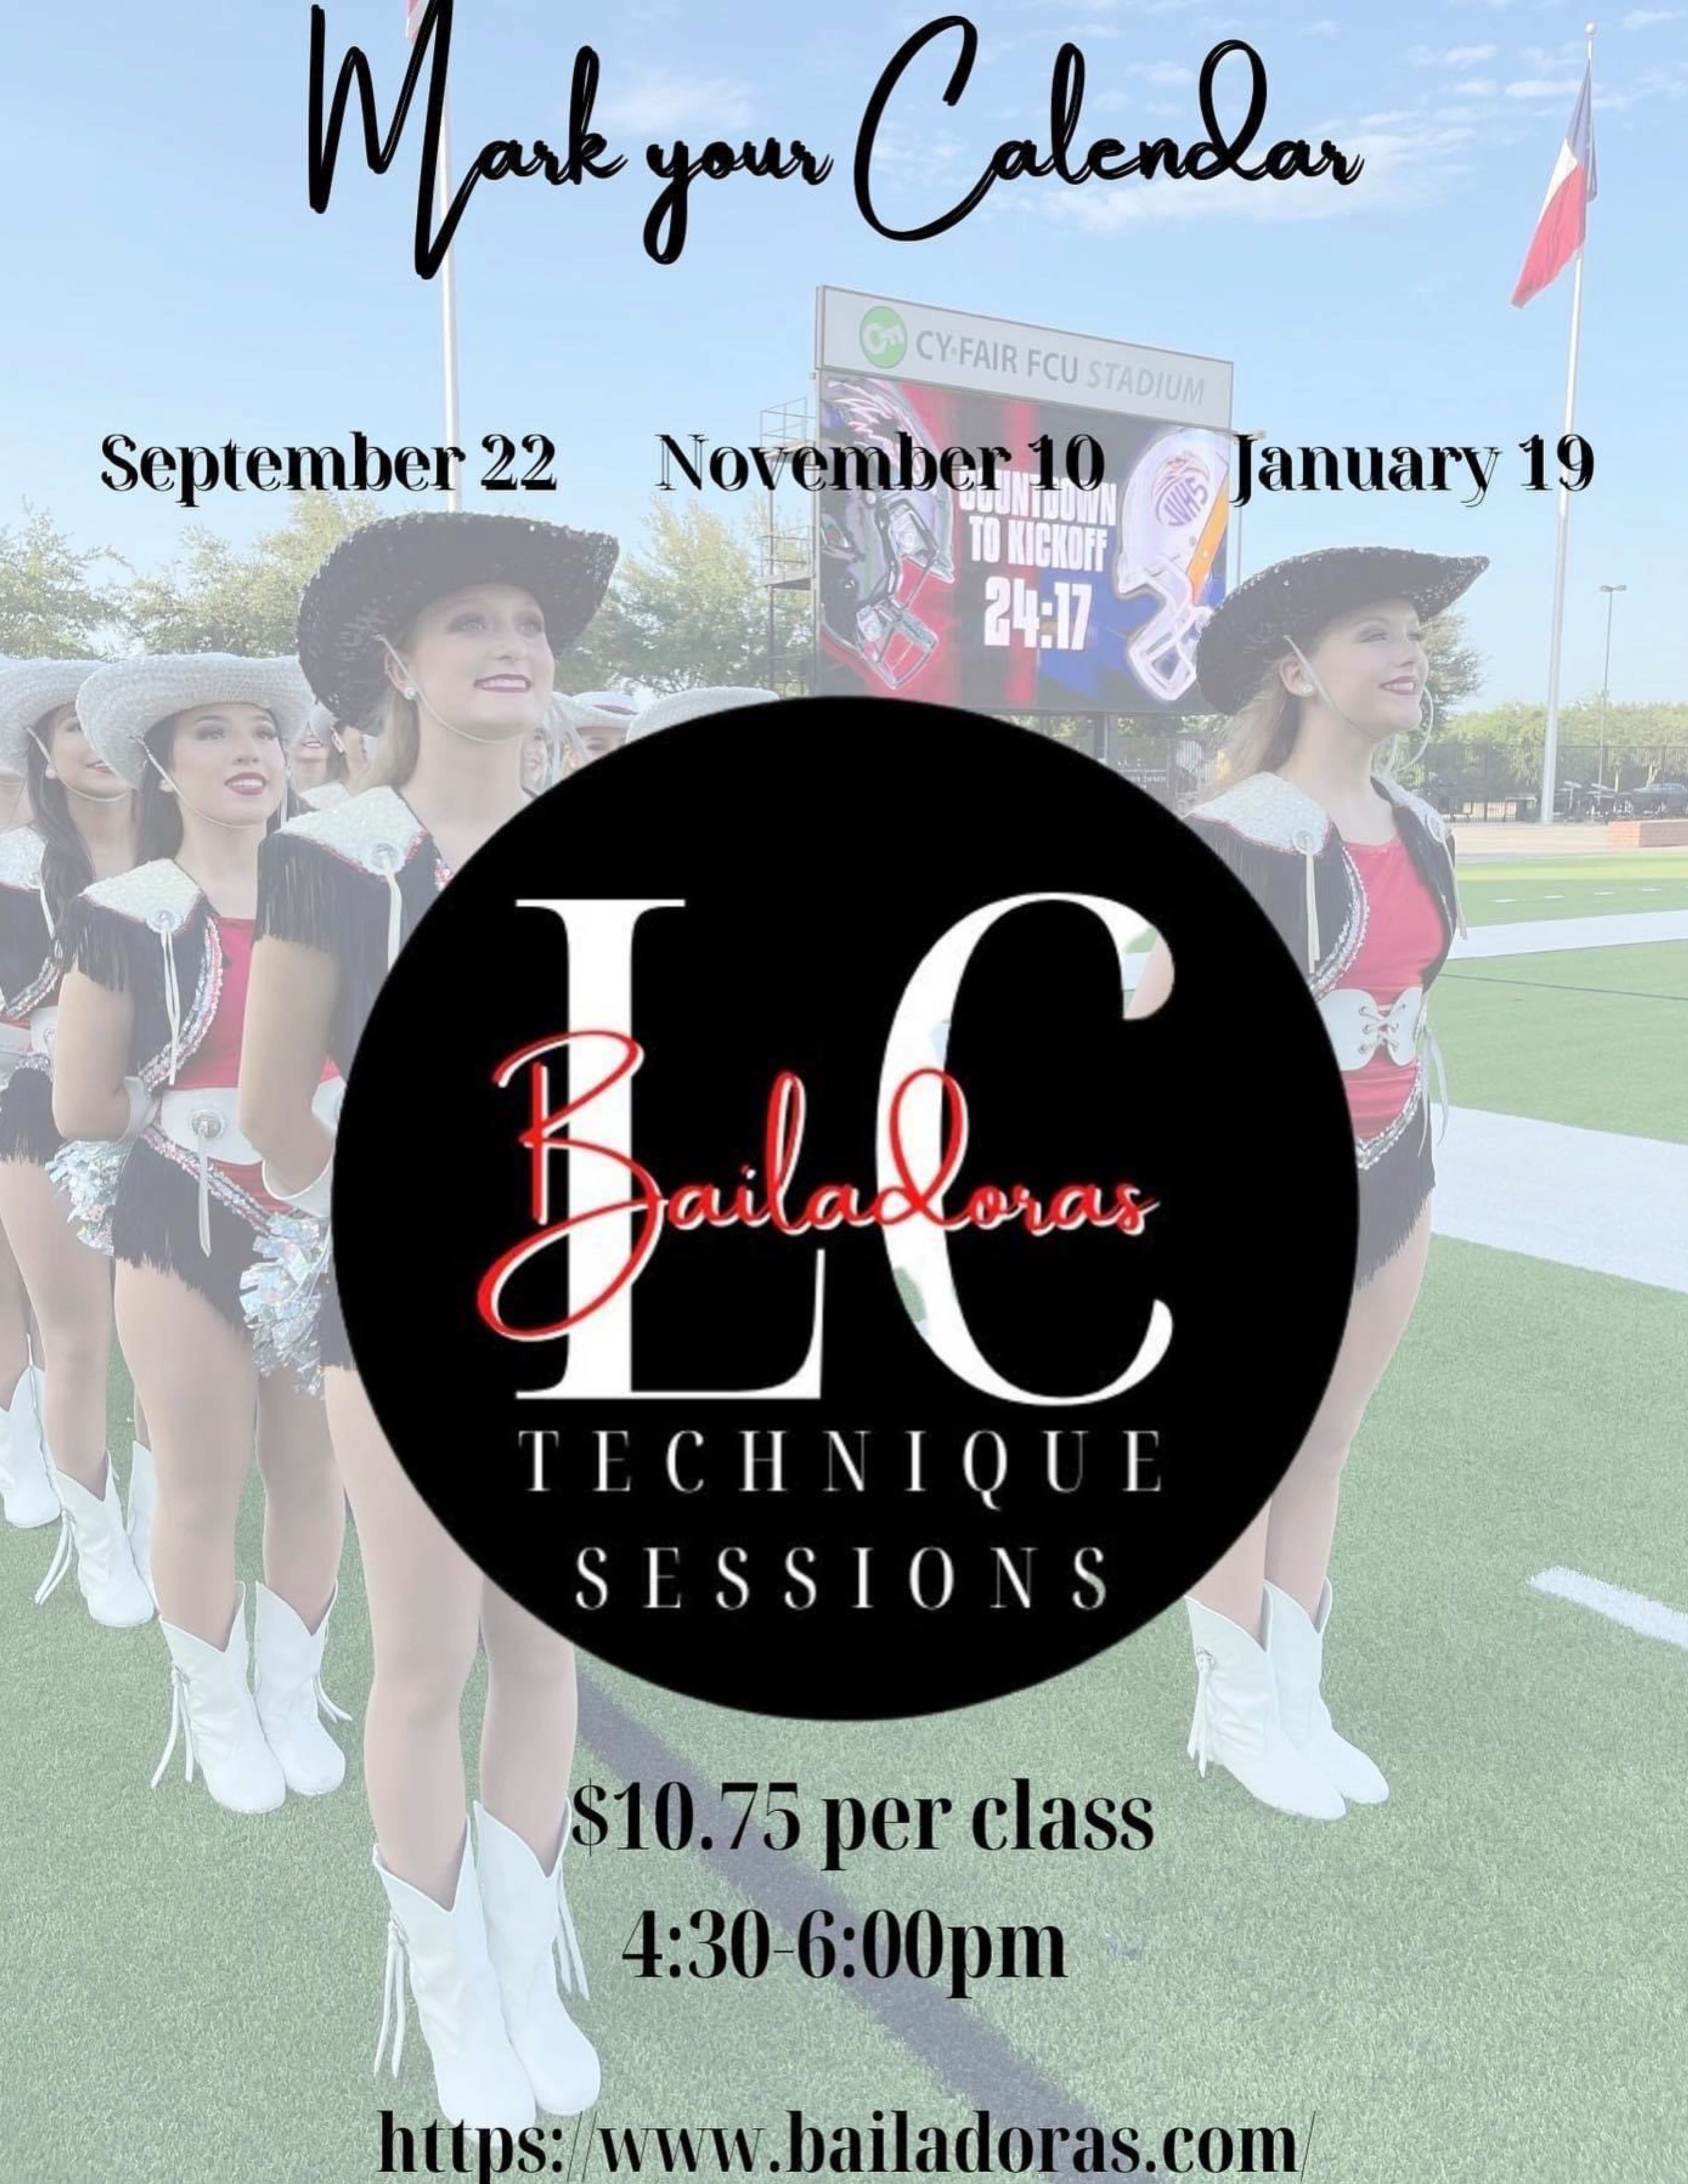 LCHS Bailadora Spring Dance Clinic 9/22, 11/10 & 1/19